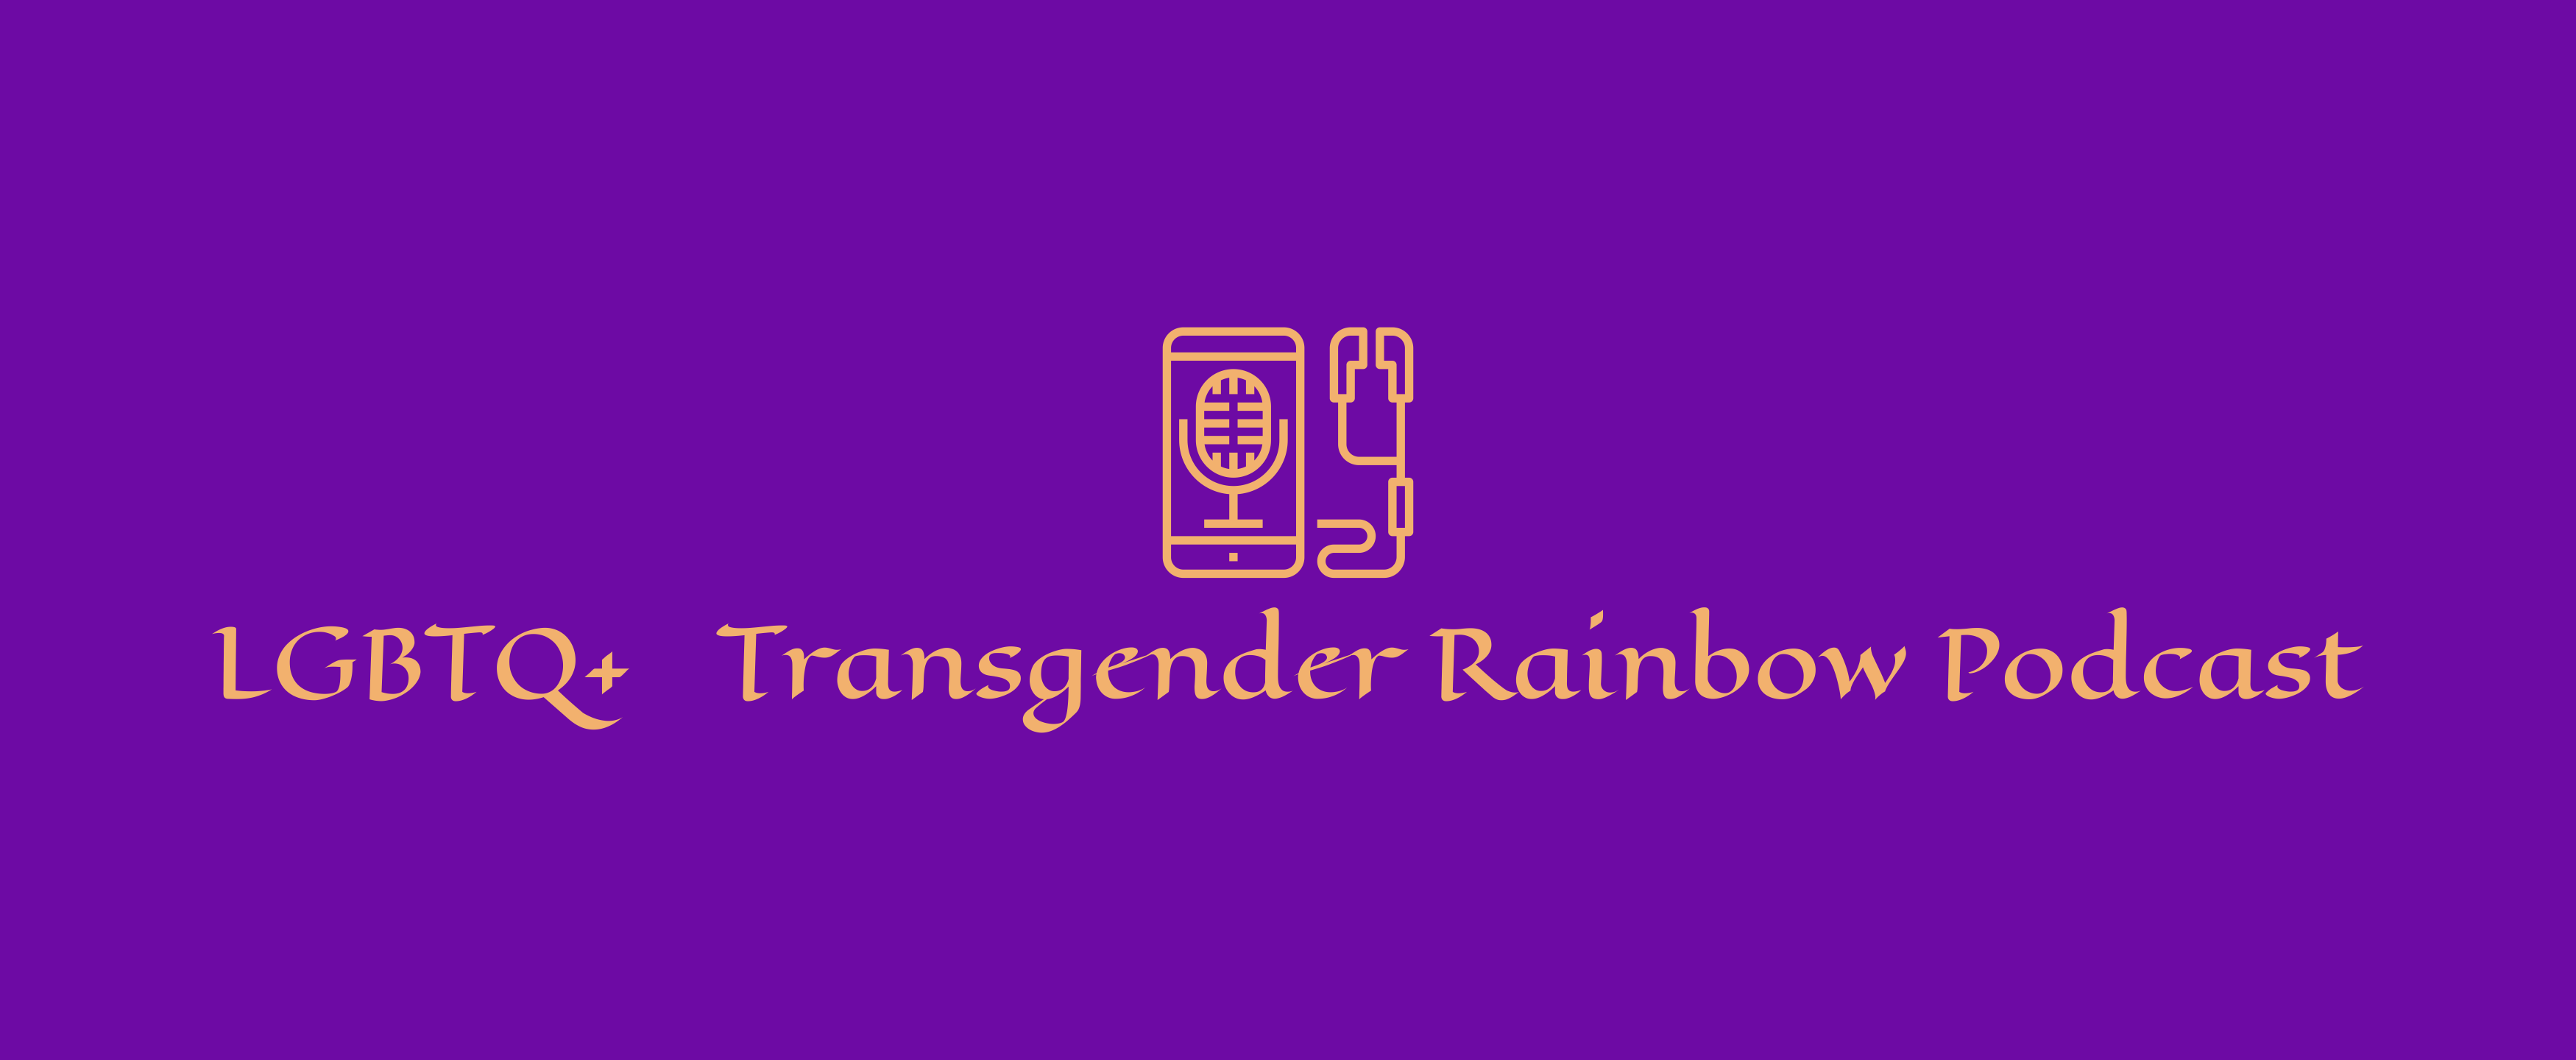 LGBTQ+ Transgender Rainbow Podcast